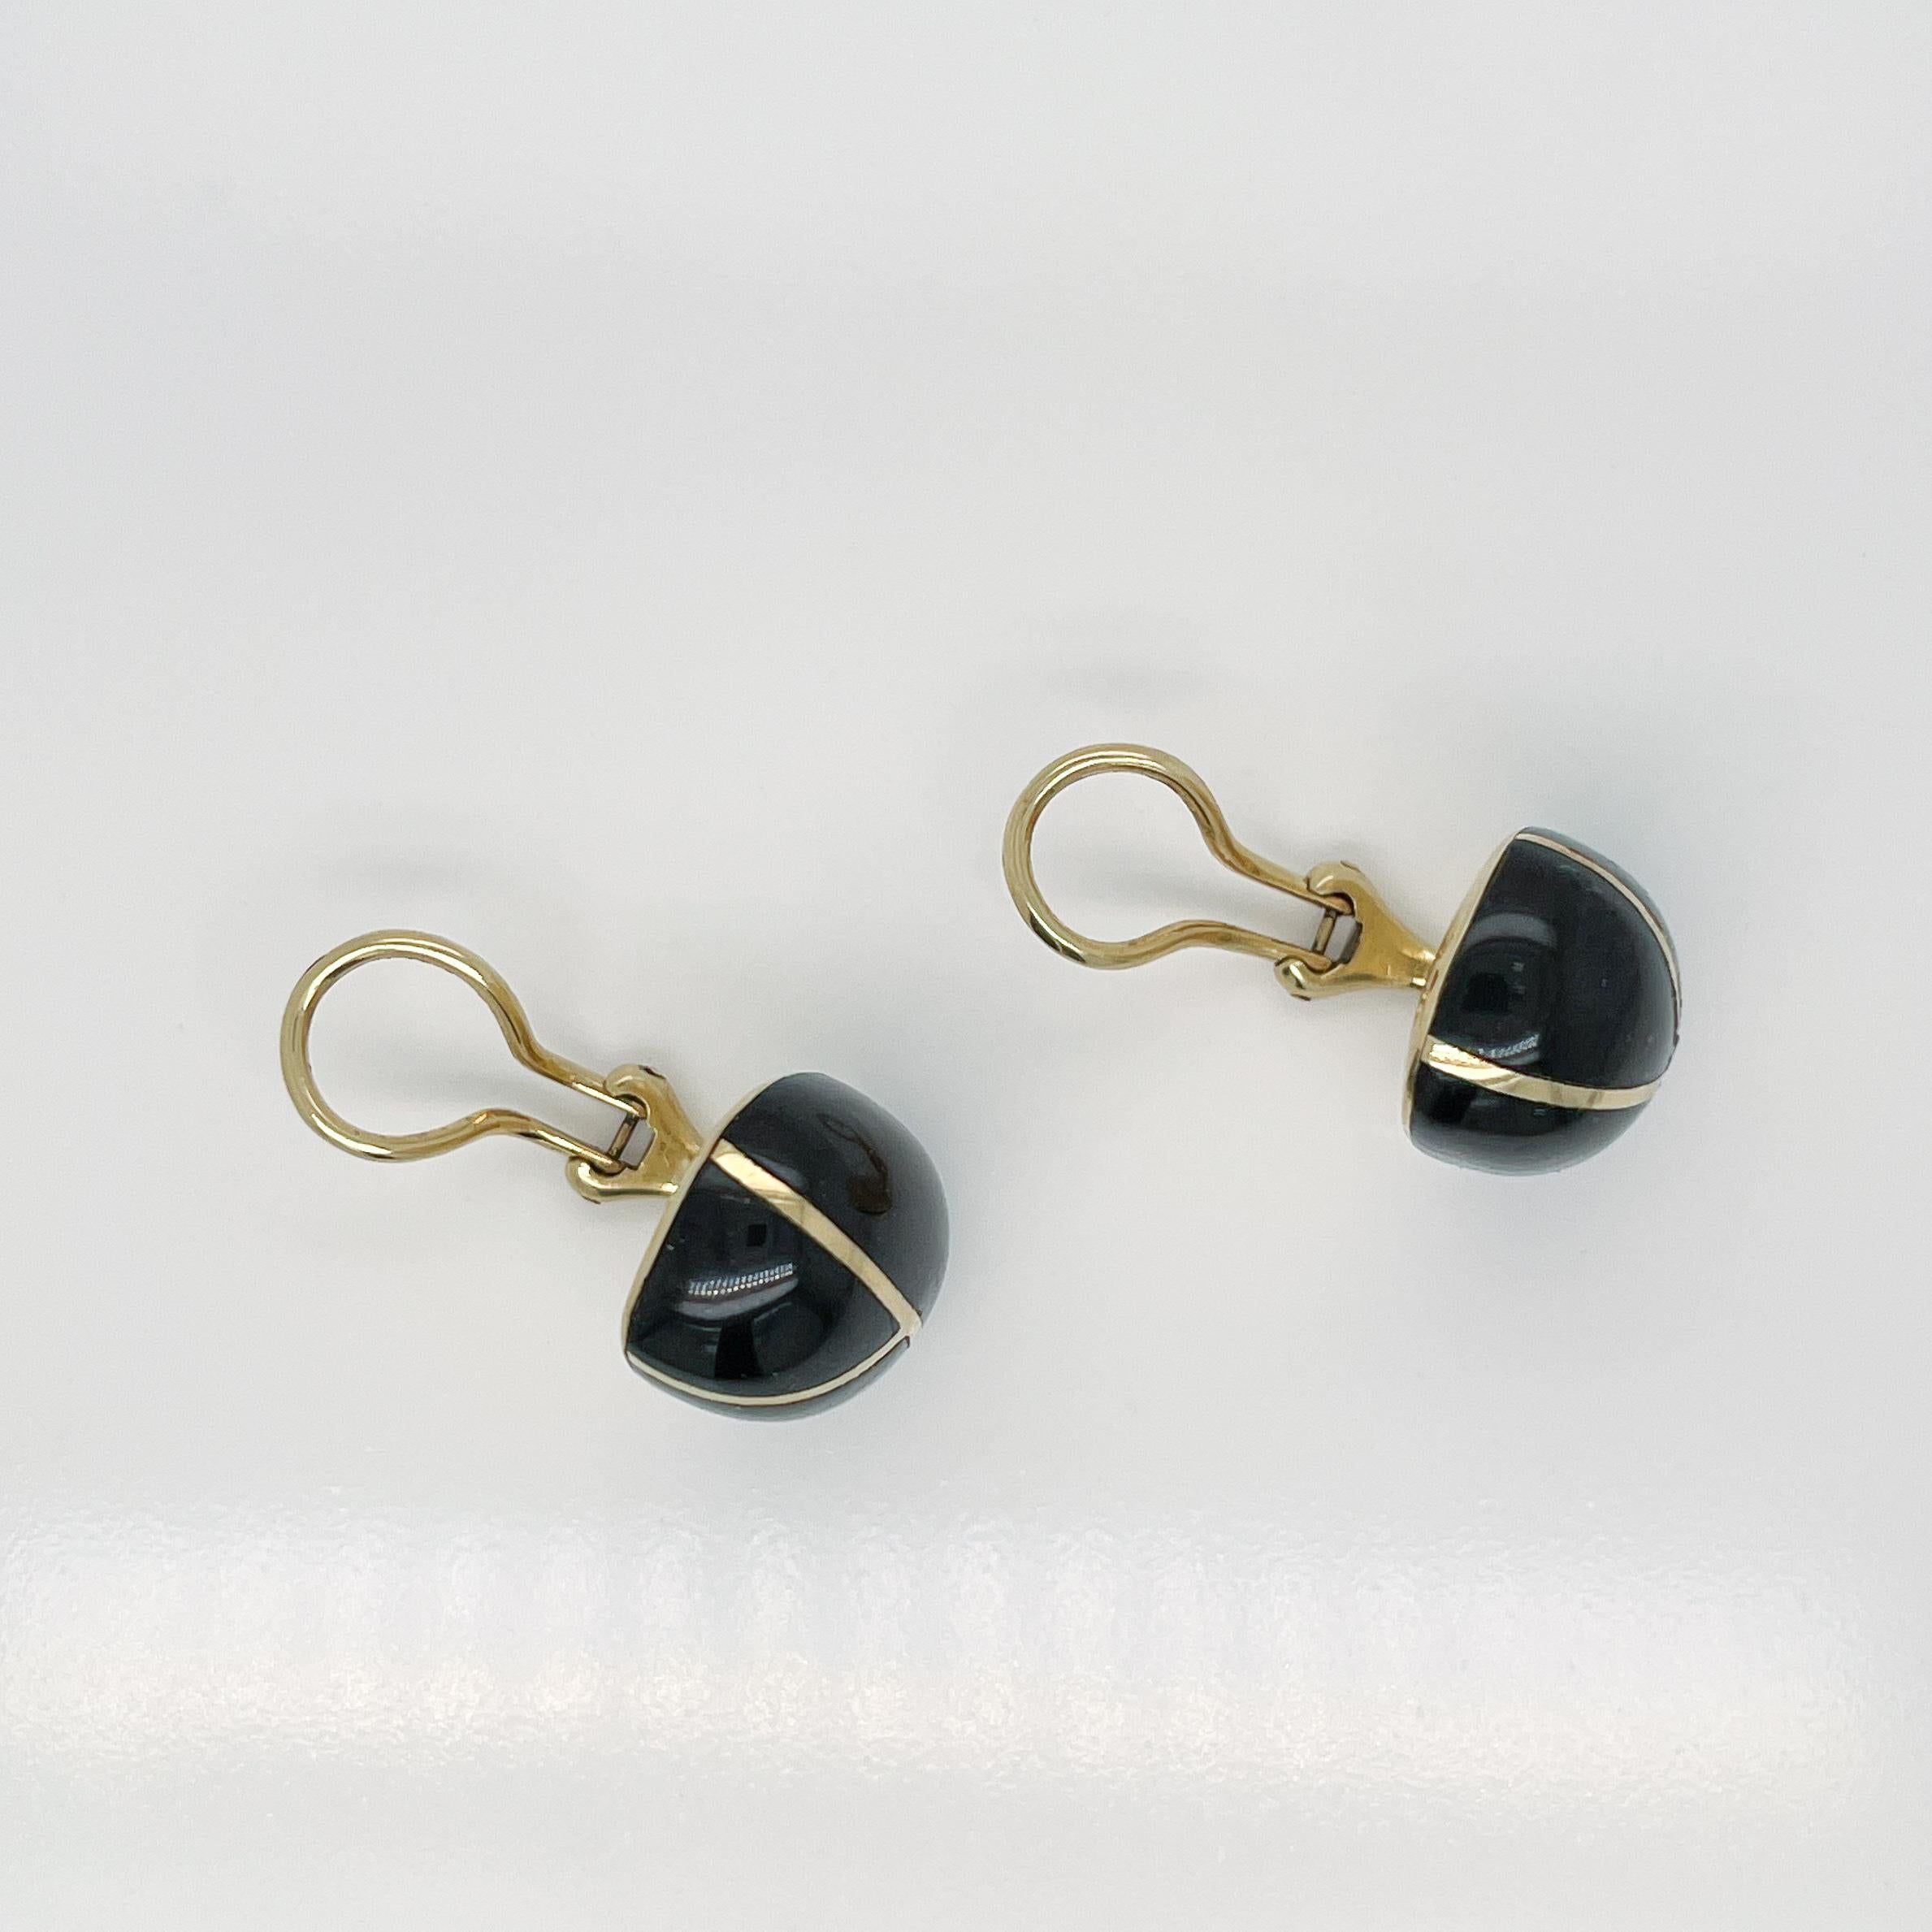 Pair Tiffany & Co 18K Gold & Black Onyx Earrings by Angela Cummings For Sale 6